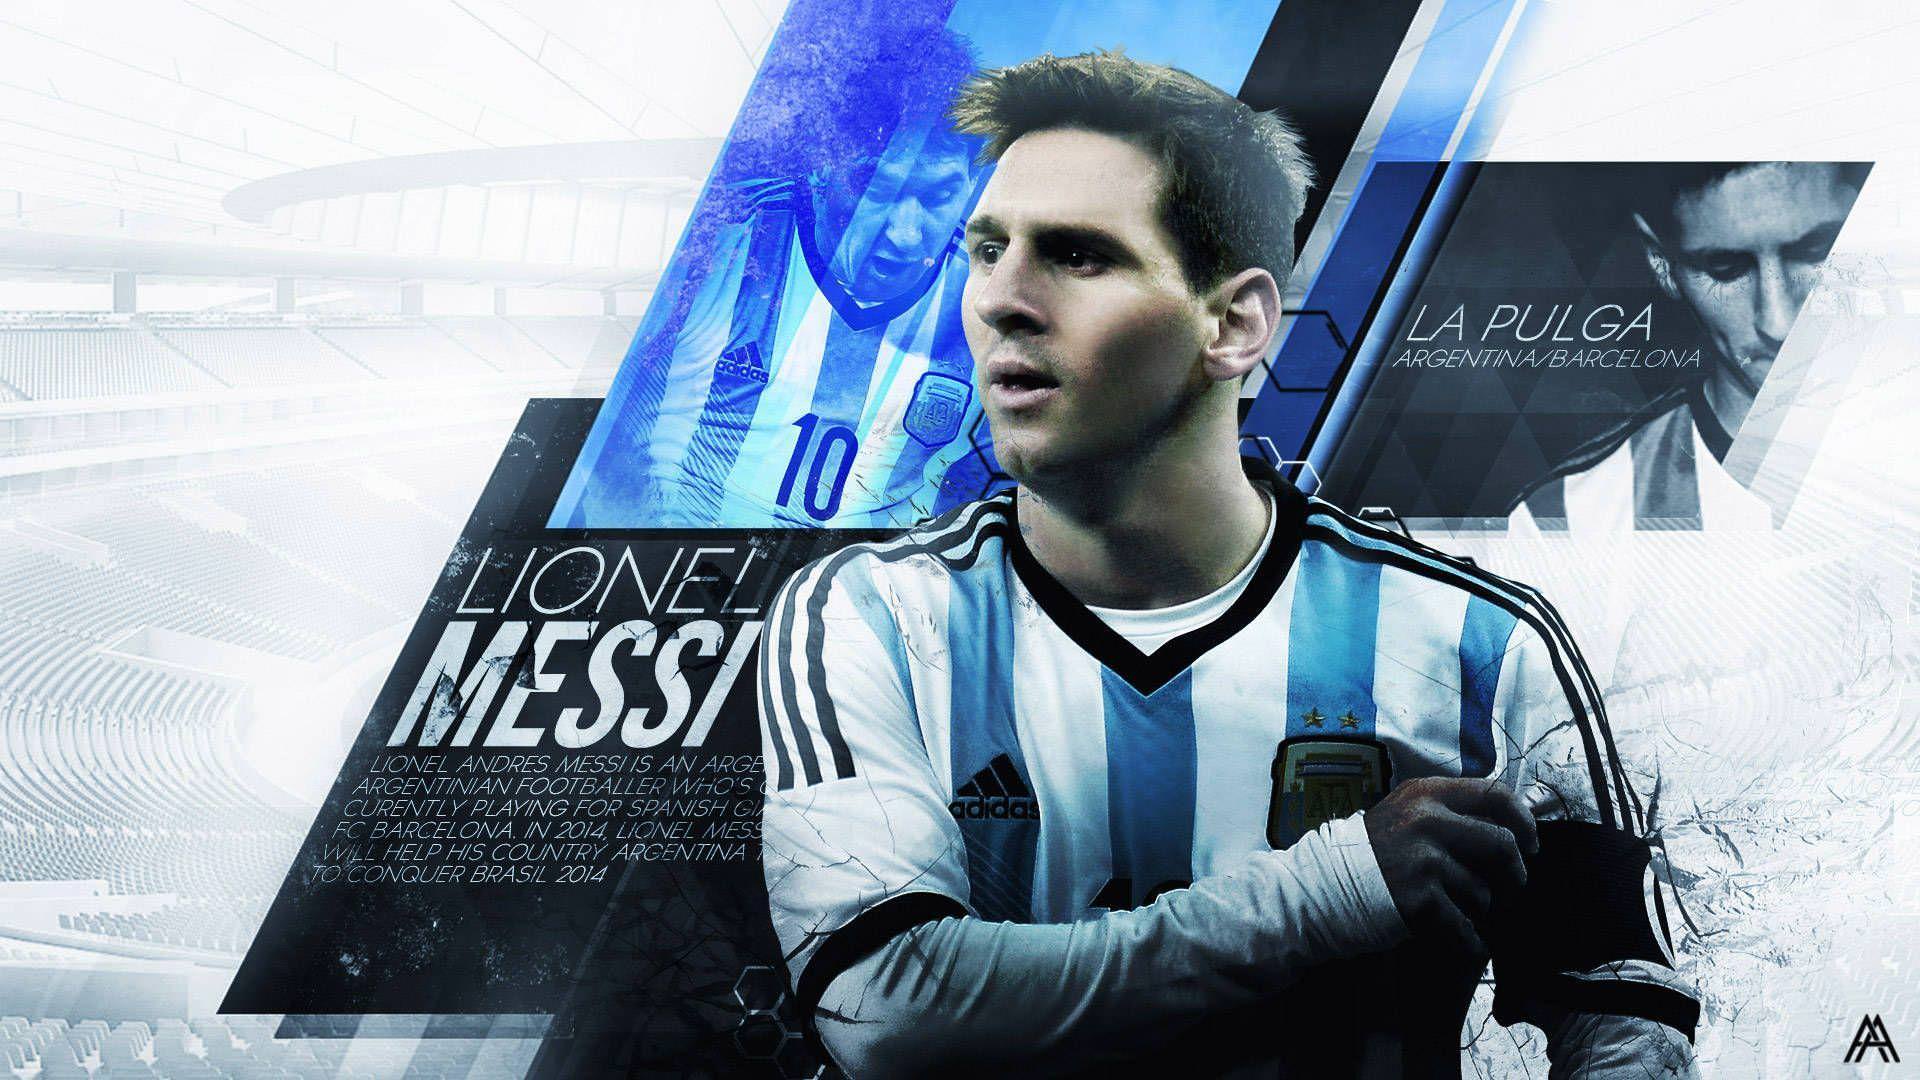 Lionel Messi Wallpaper 2018 For Desktop, iPhone & Mobile